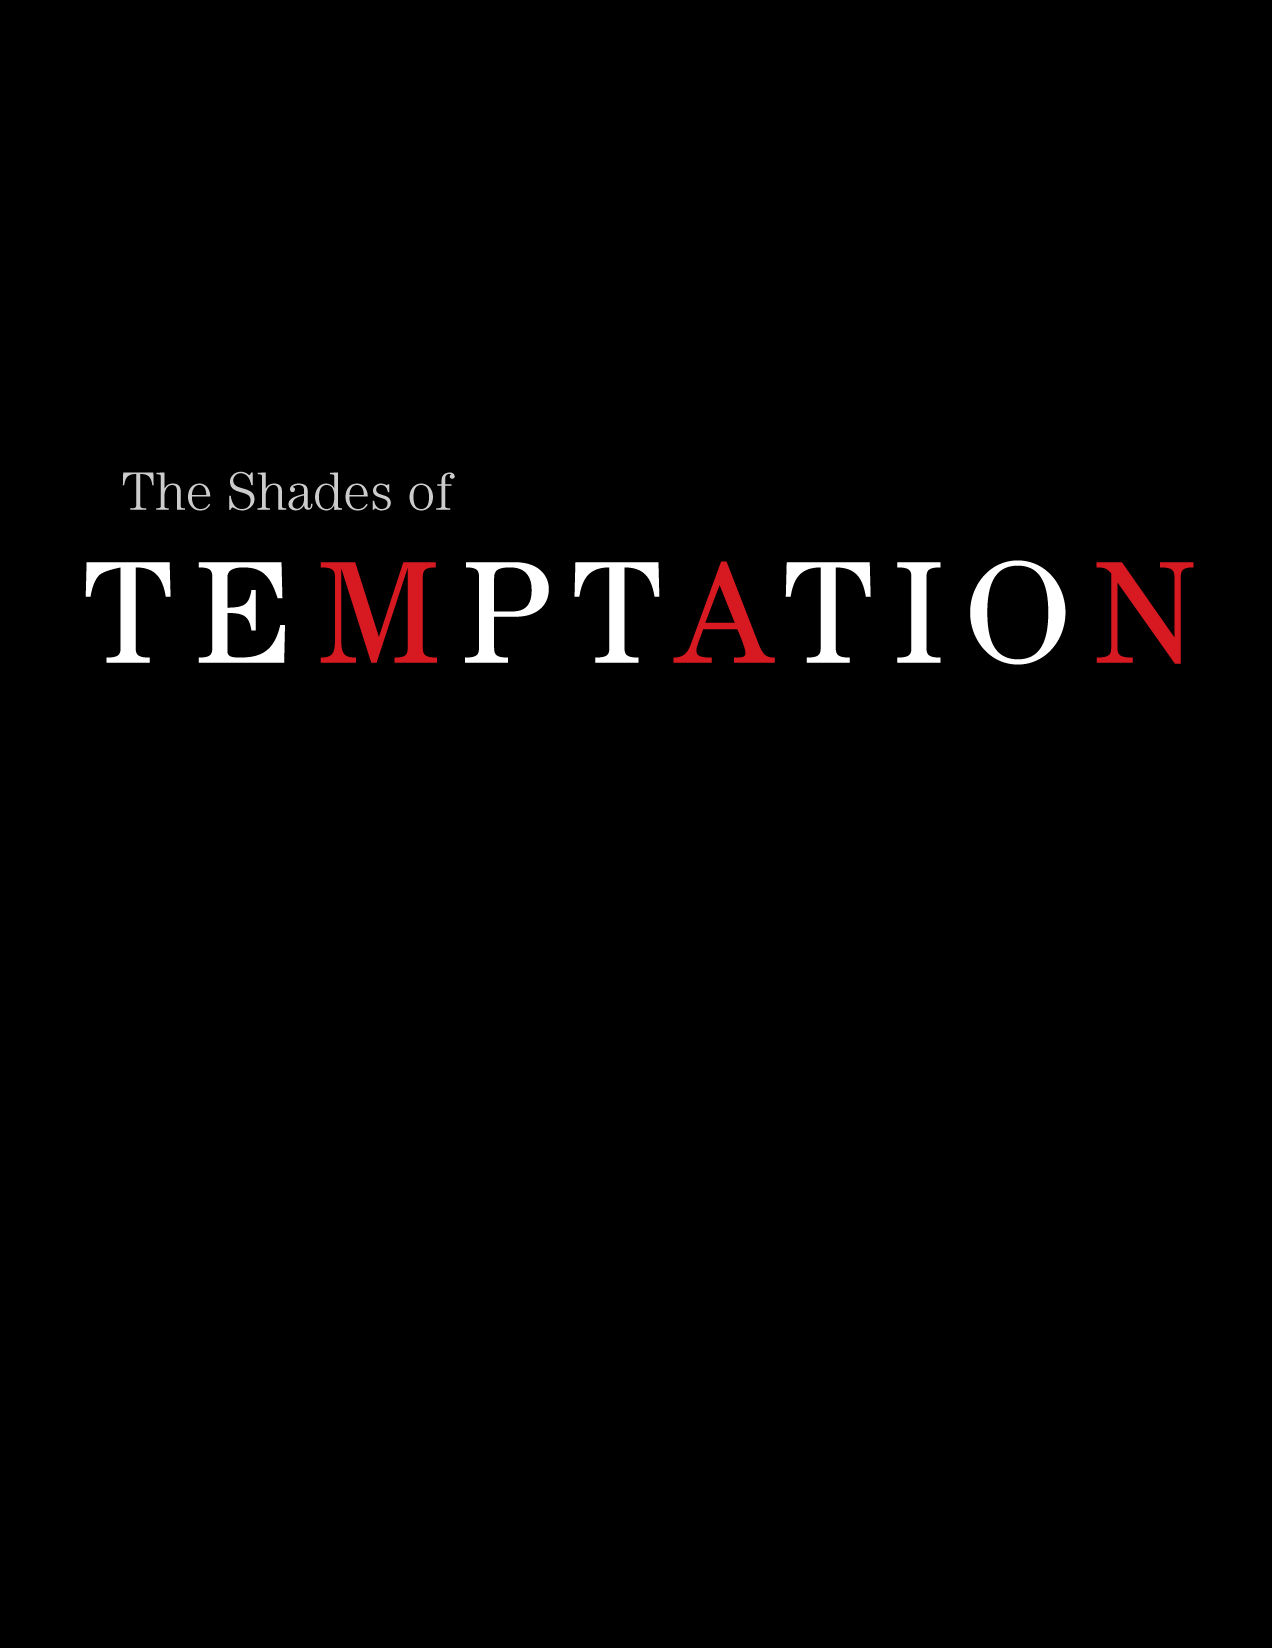 The Shades of Temptation